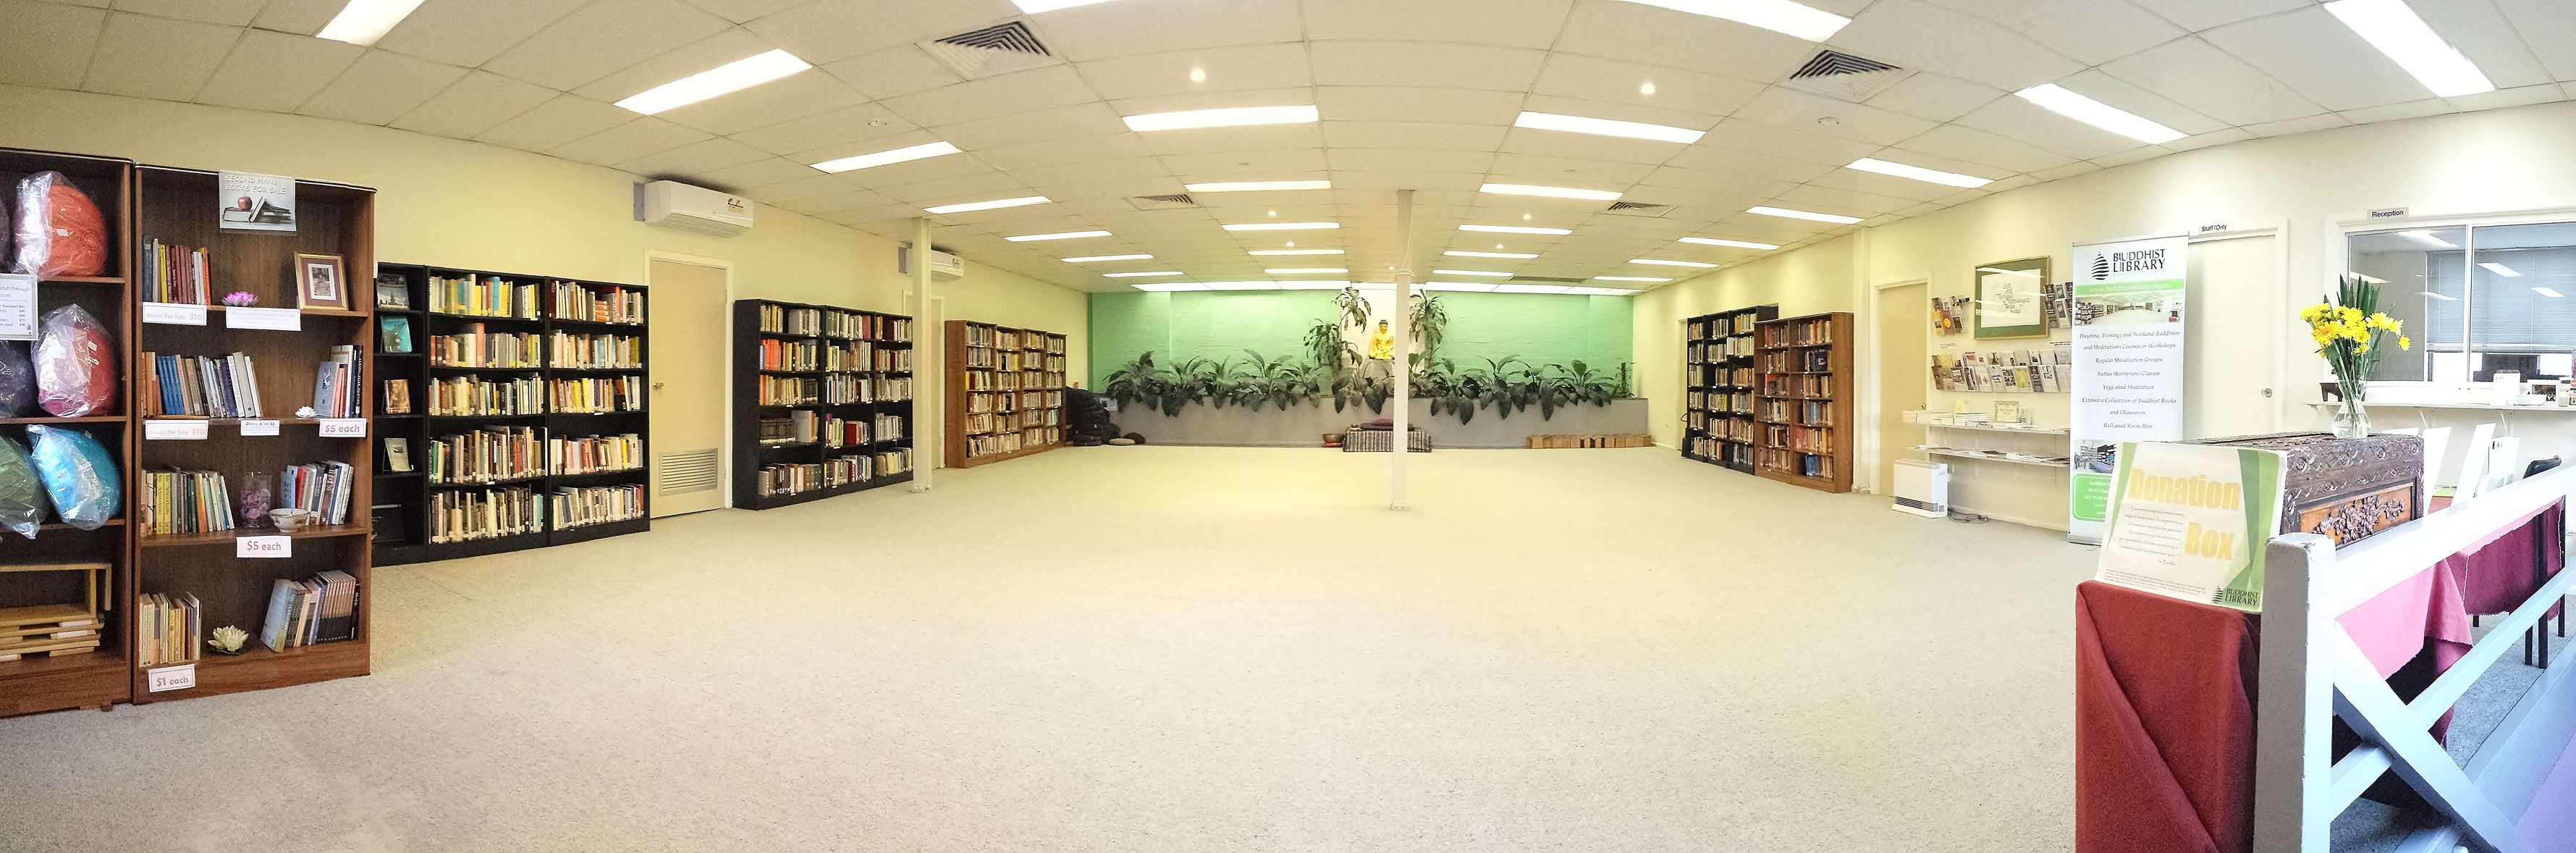 Buddhist Library And Meditation Centre Sydney